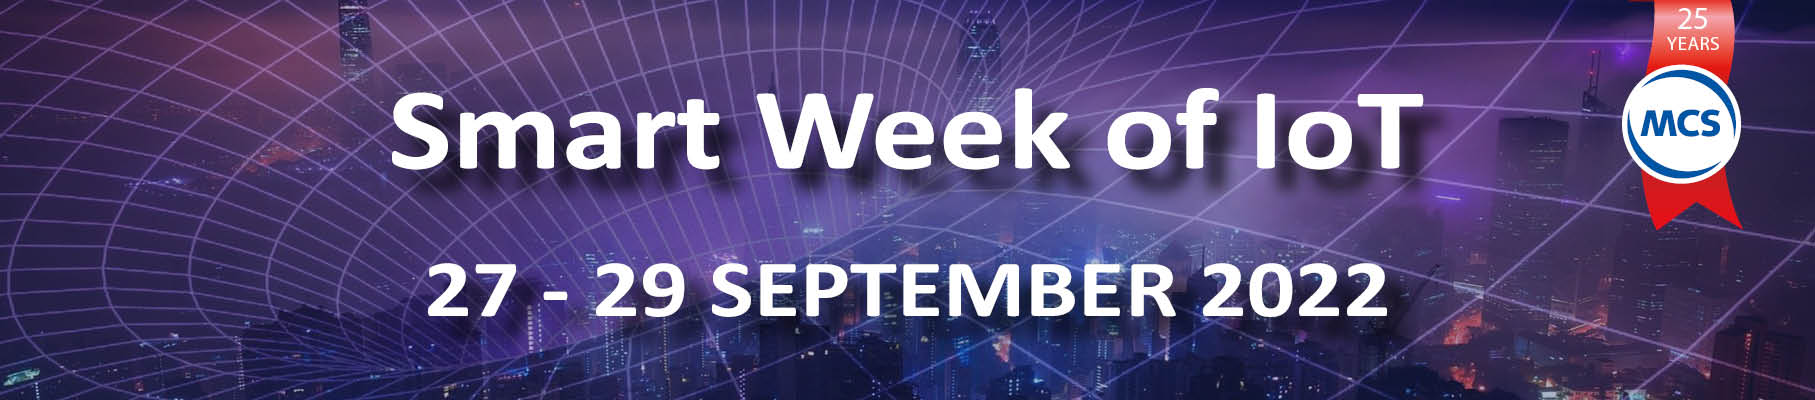 MCS Smart Week of IoT van 27 t/m 29 september 2022